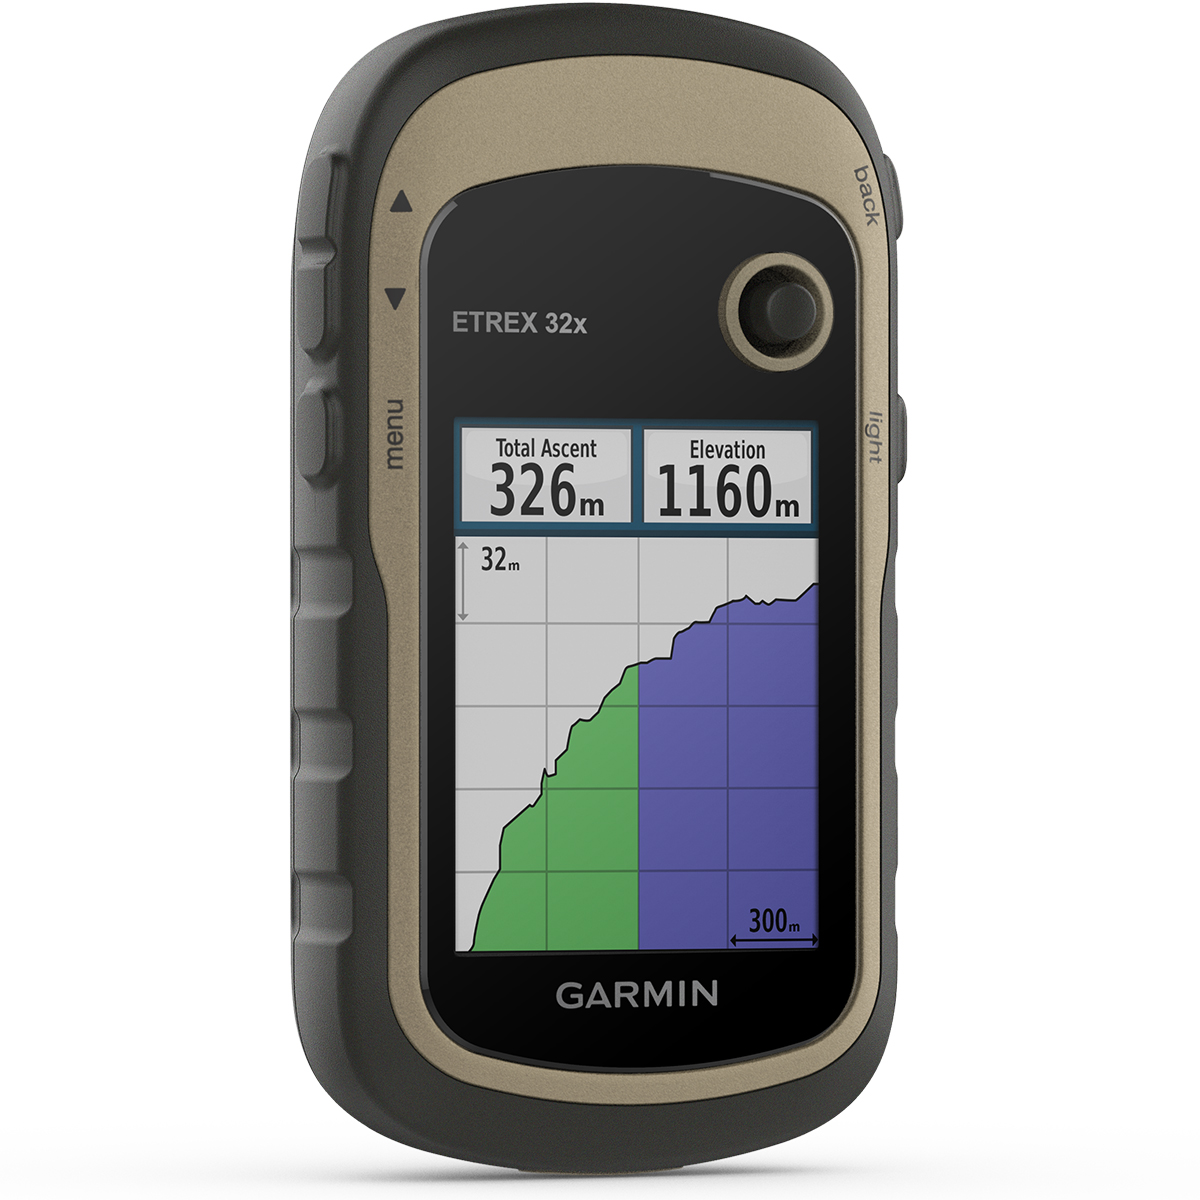 GARMIN eTrex 32x Handheld GPS